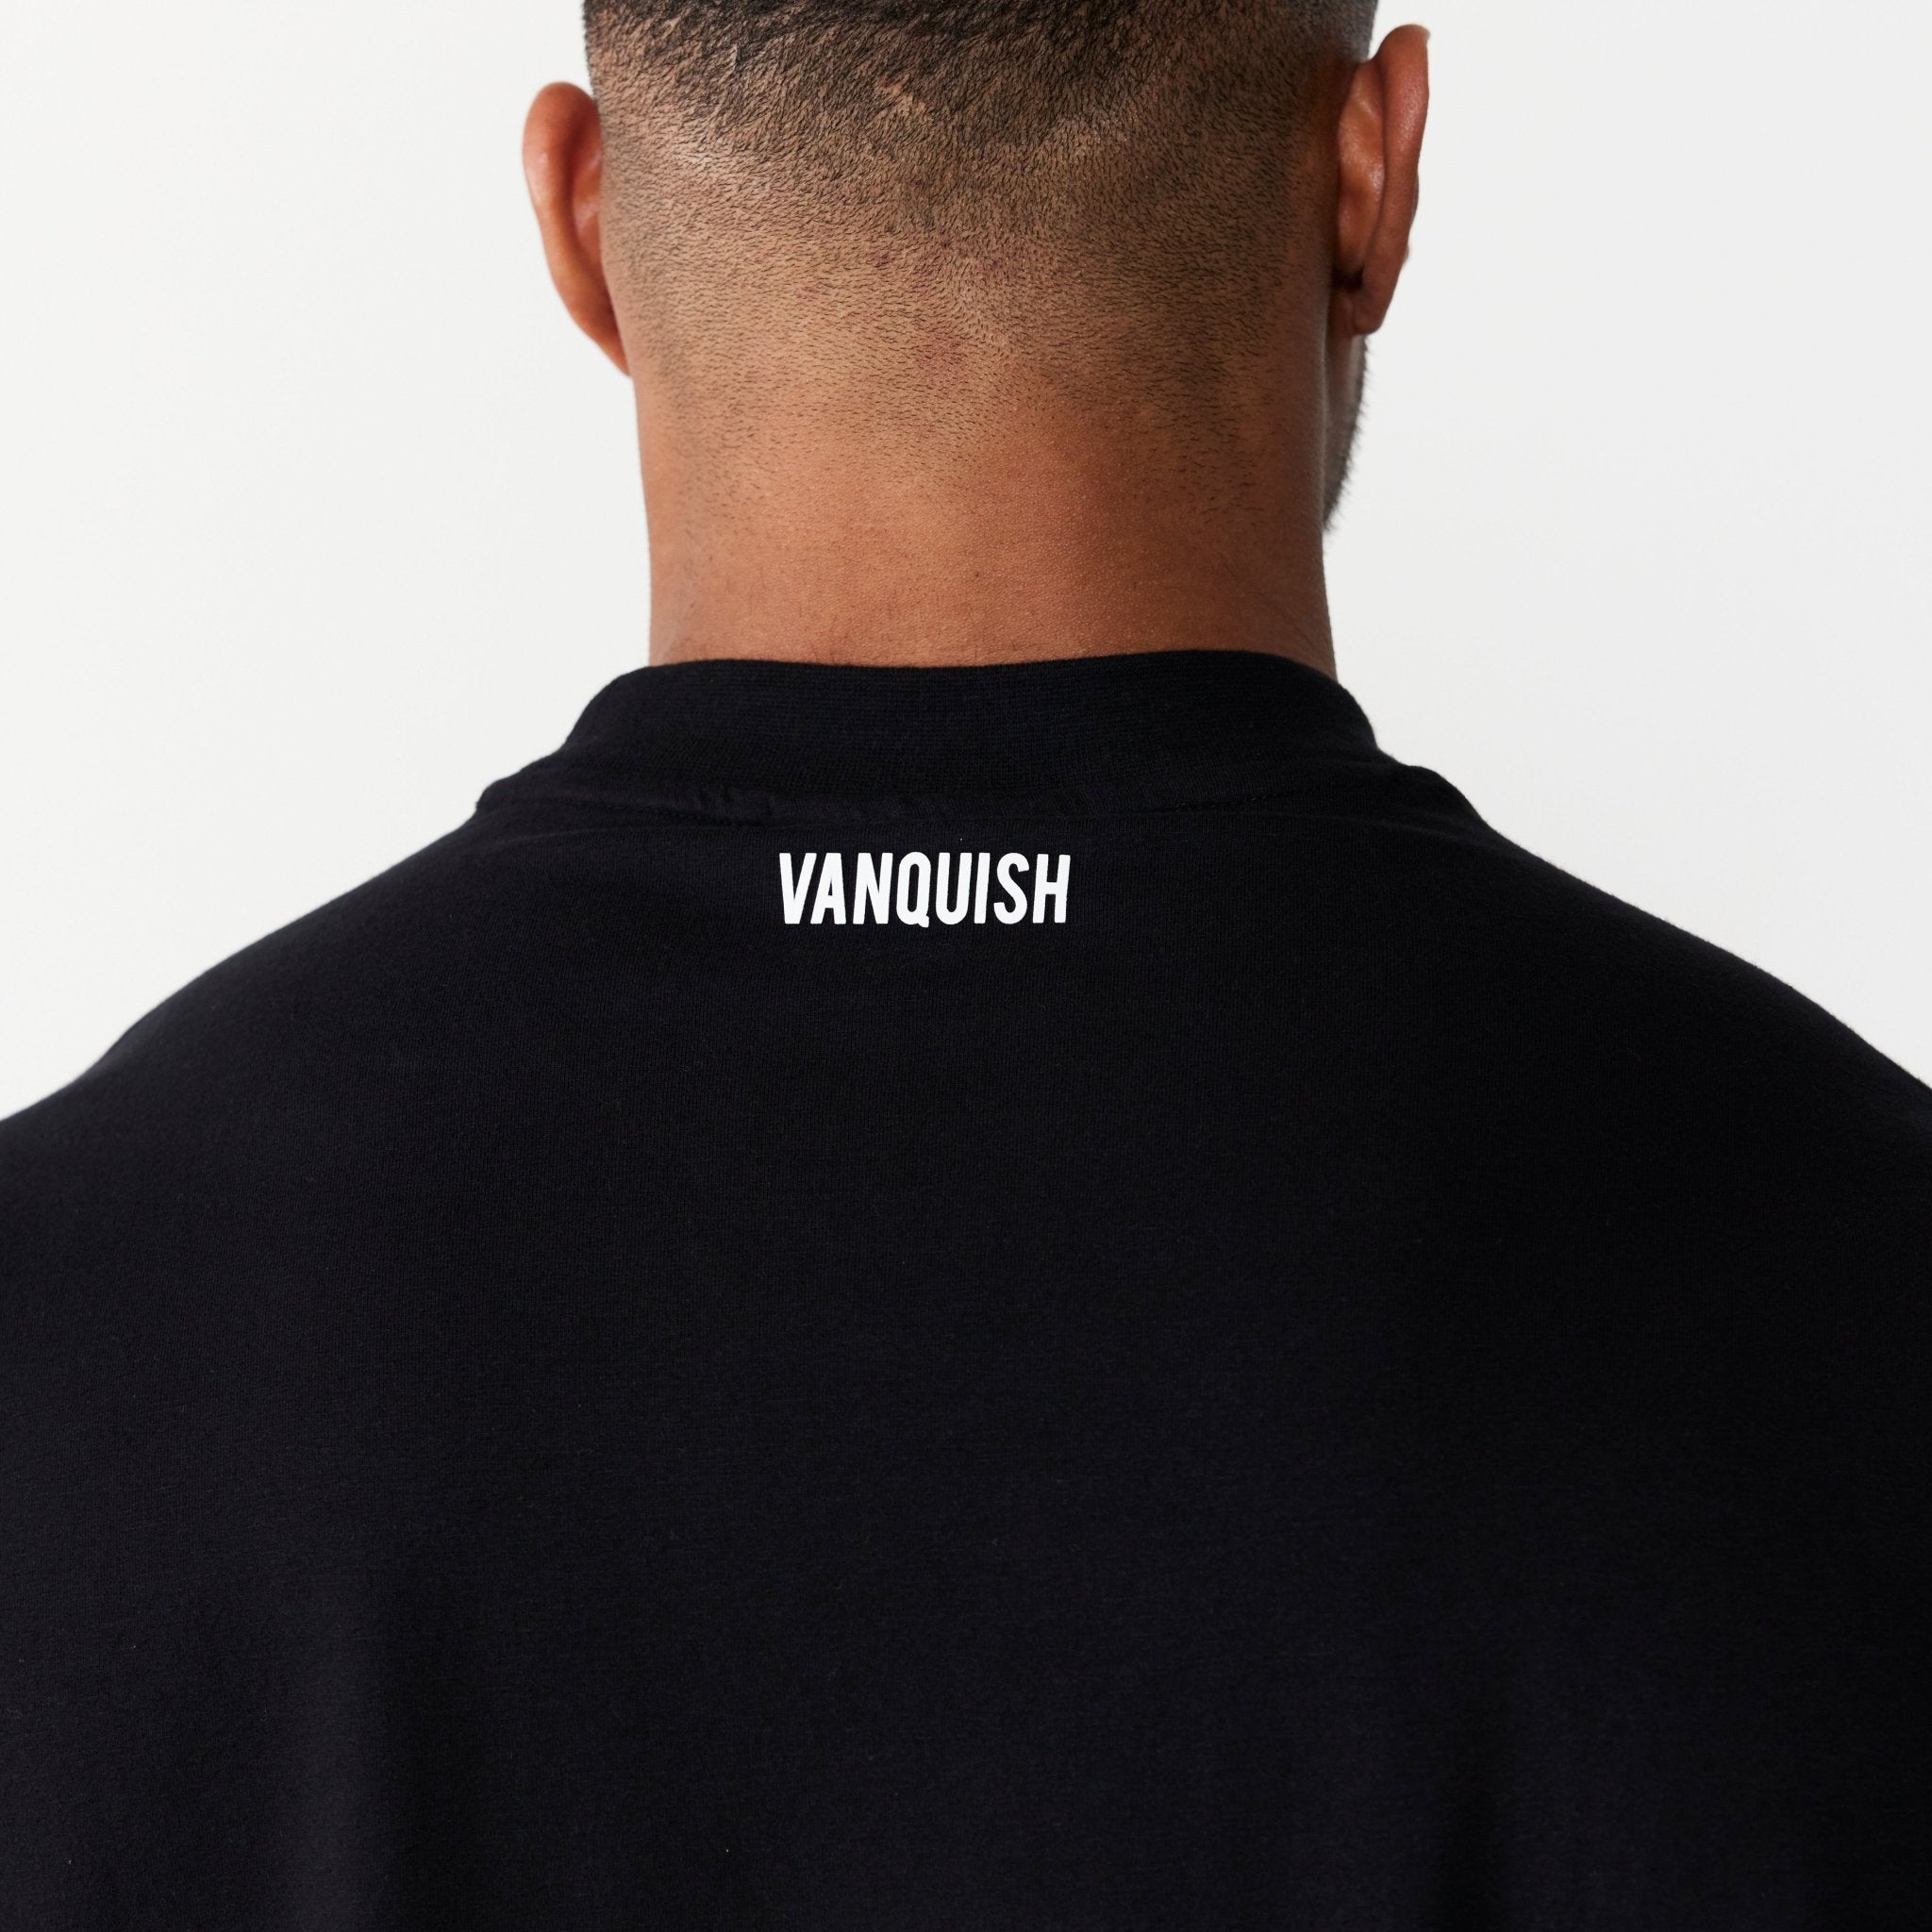 Vanquish DBZ Vegeta Black Oversized T Shirt - Vanquish Fitness